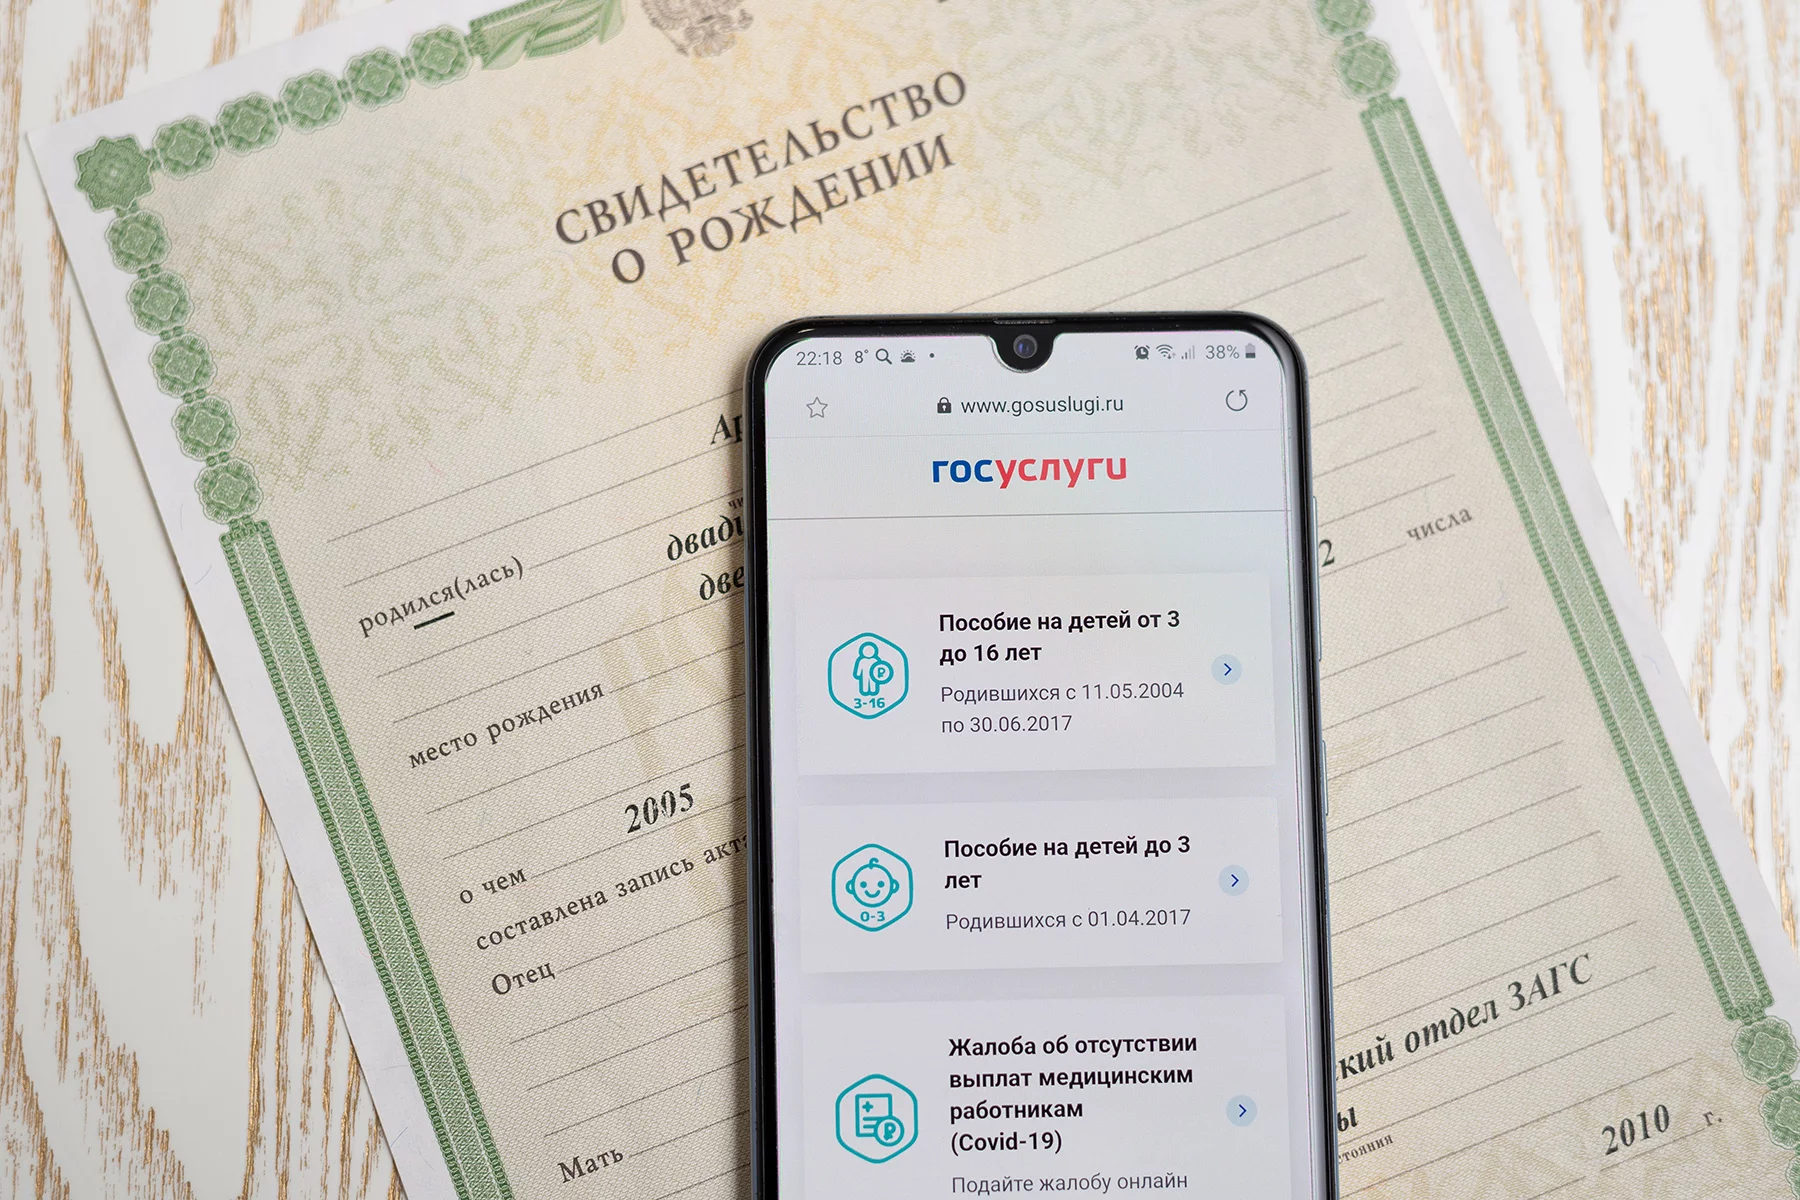 Russian government app (gosuslugi) with a birth certificate